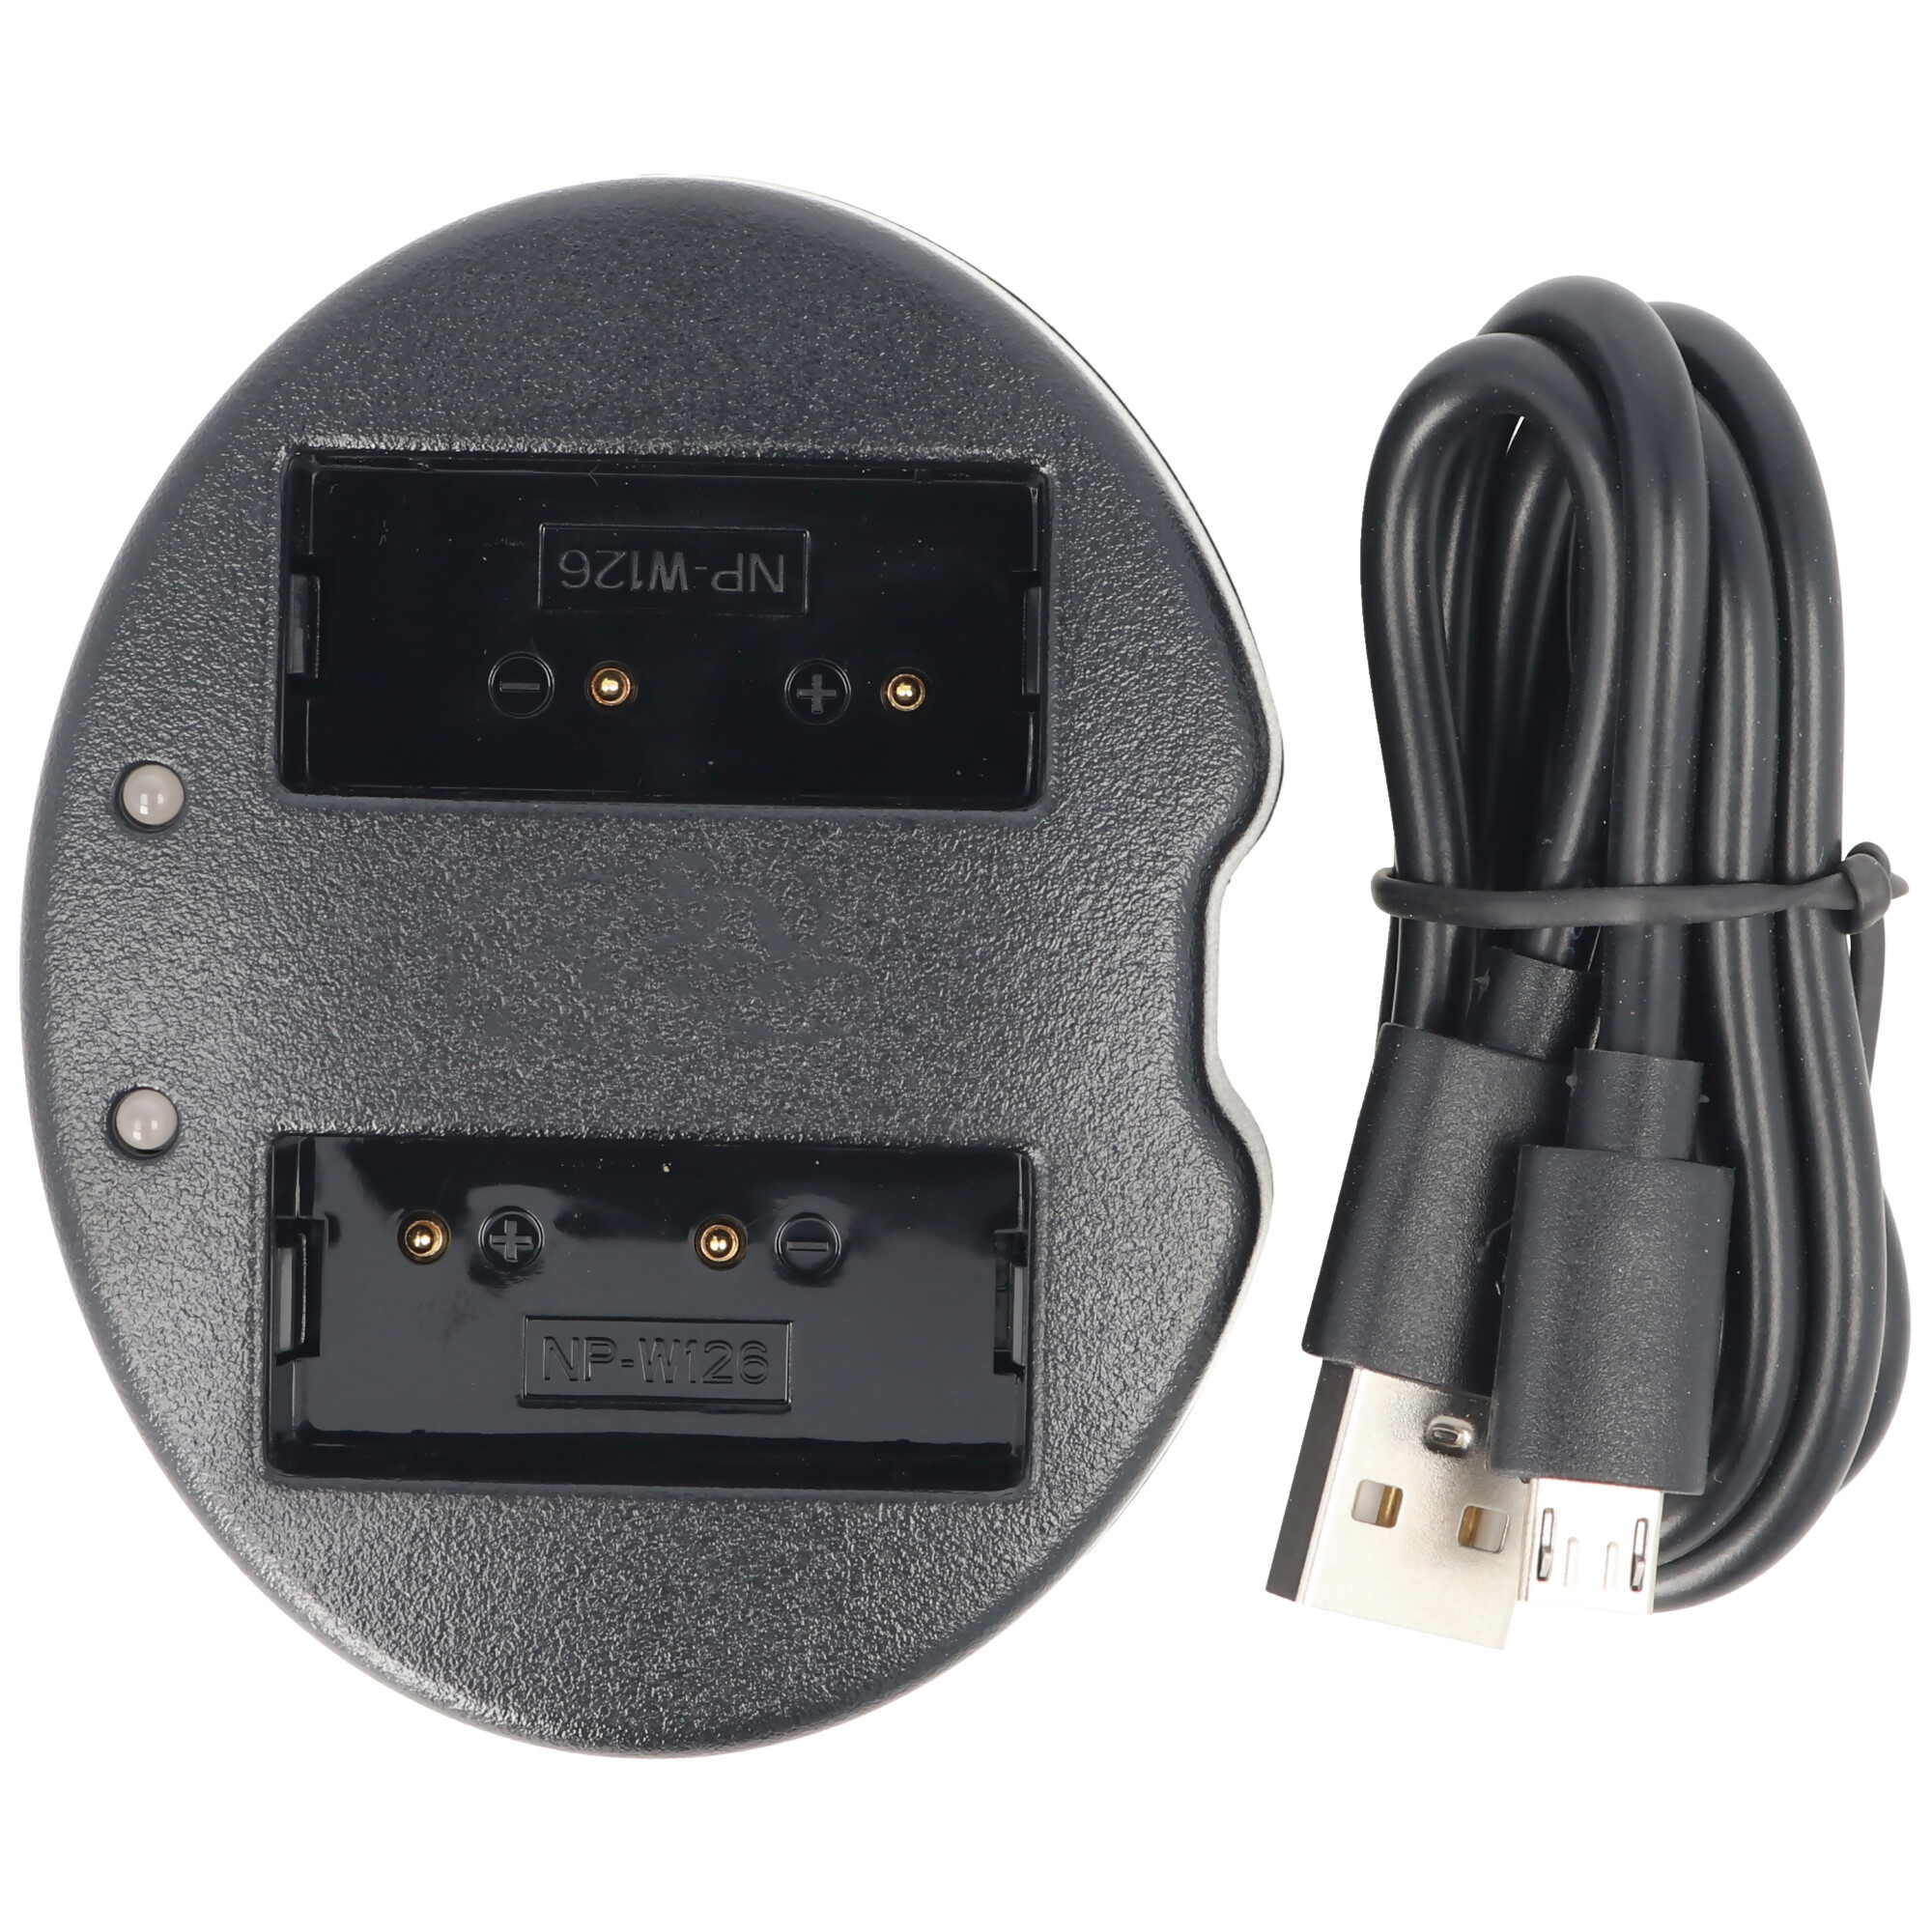 2-Fach USB Ladegerät für zwei Stück Fuji Akku NP-W126, Lieferung inklusive Ladeadapter und USB-Ladekabel